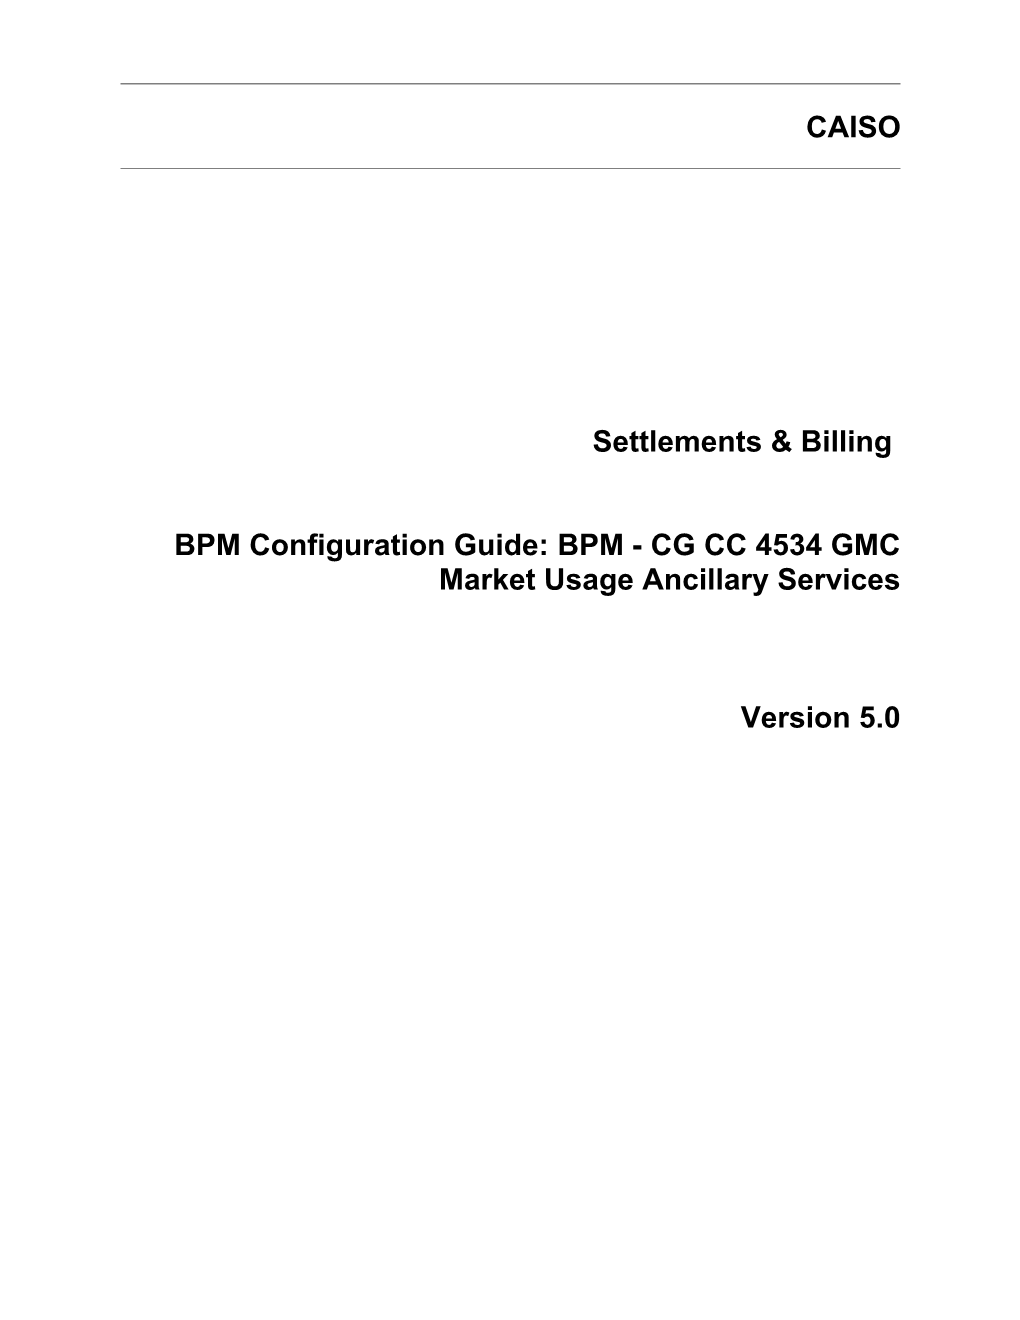 BPM - CG CC 4534 GMC Market Usage Ancillary Services